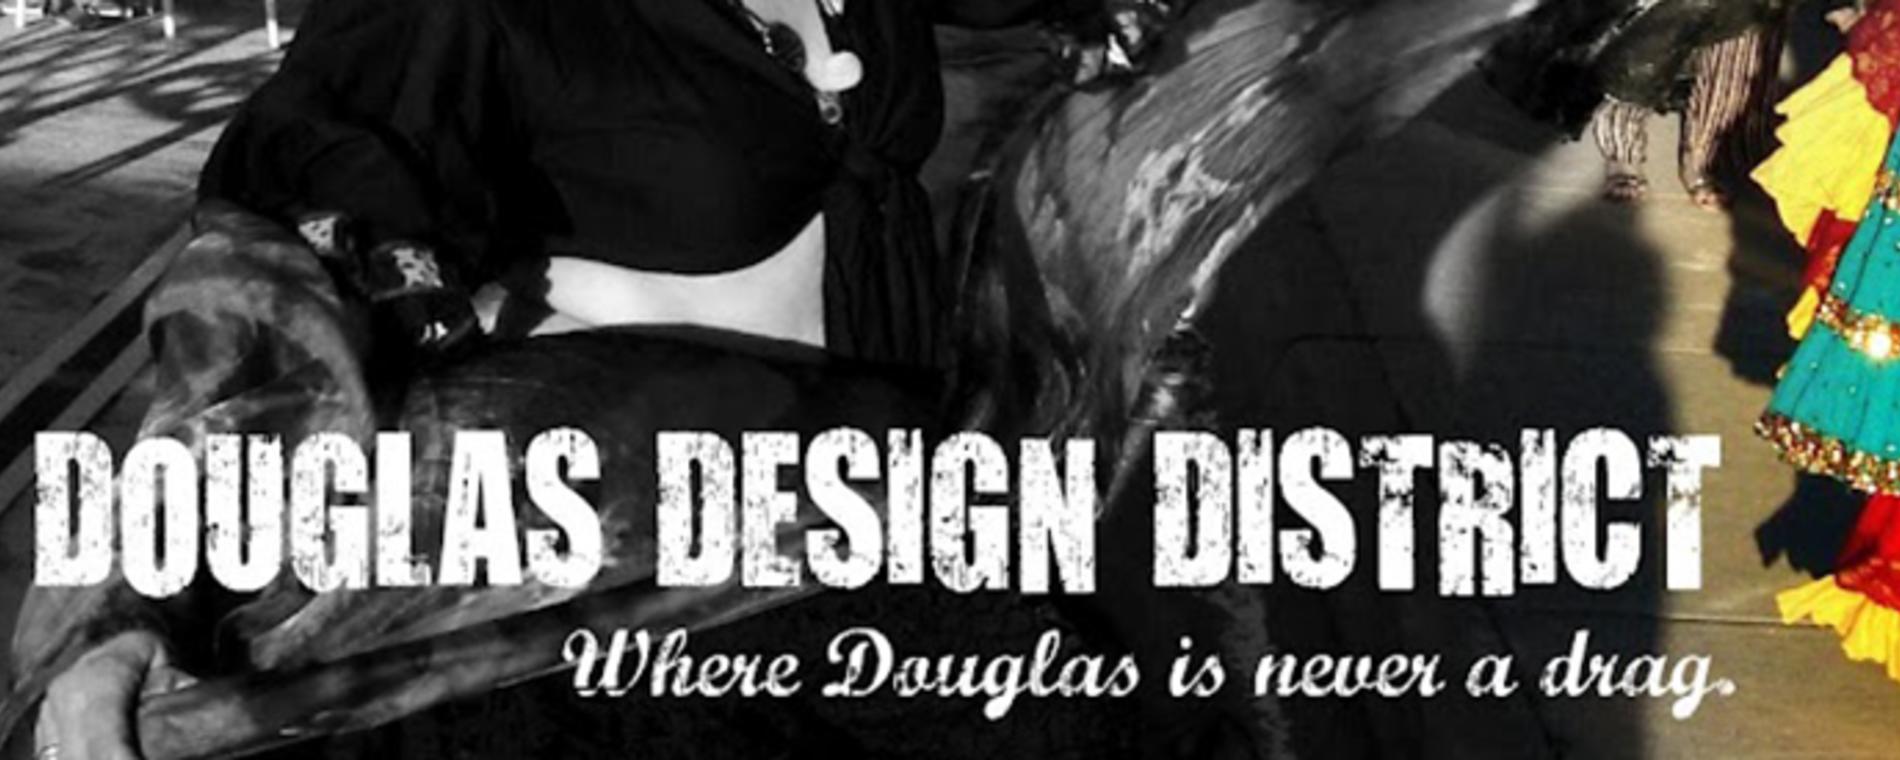 Douglas Design District - Where Douglas is Never a Drag.